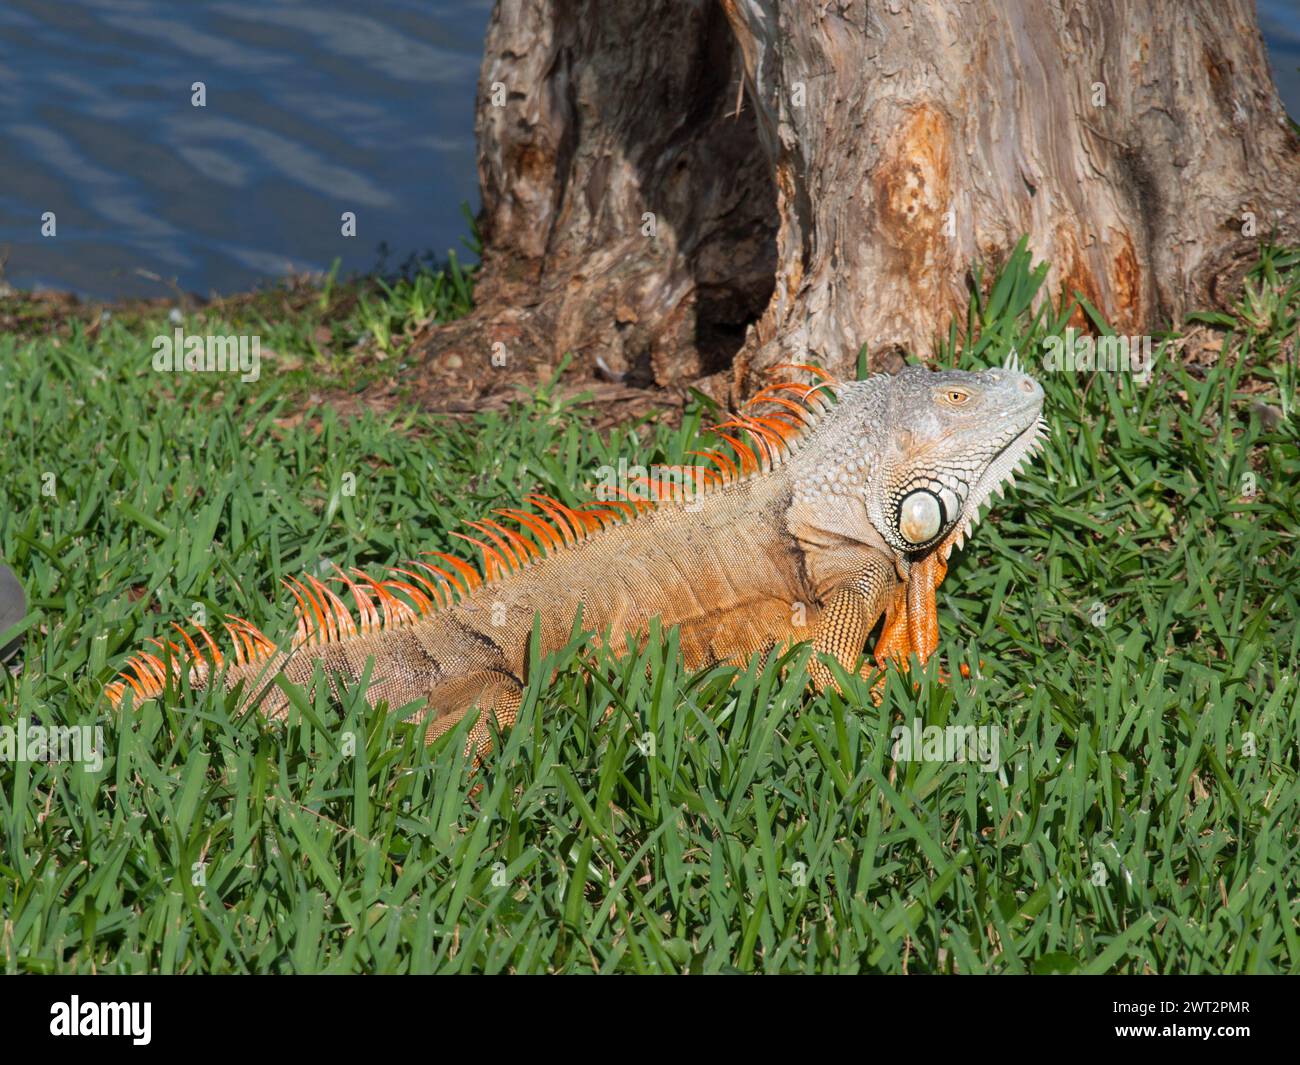 Green iguana or American iguana (Iguana iguana) taking sun. Invasive species in the United States. Stock Photo